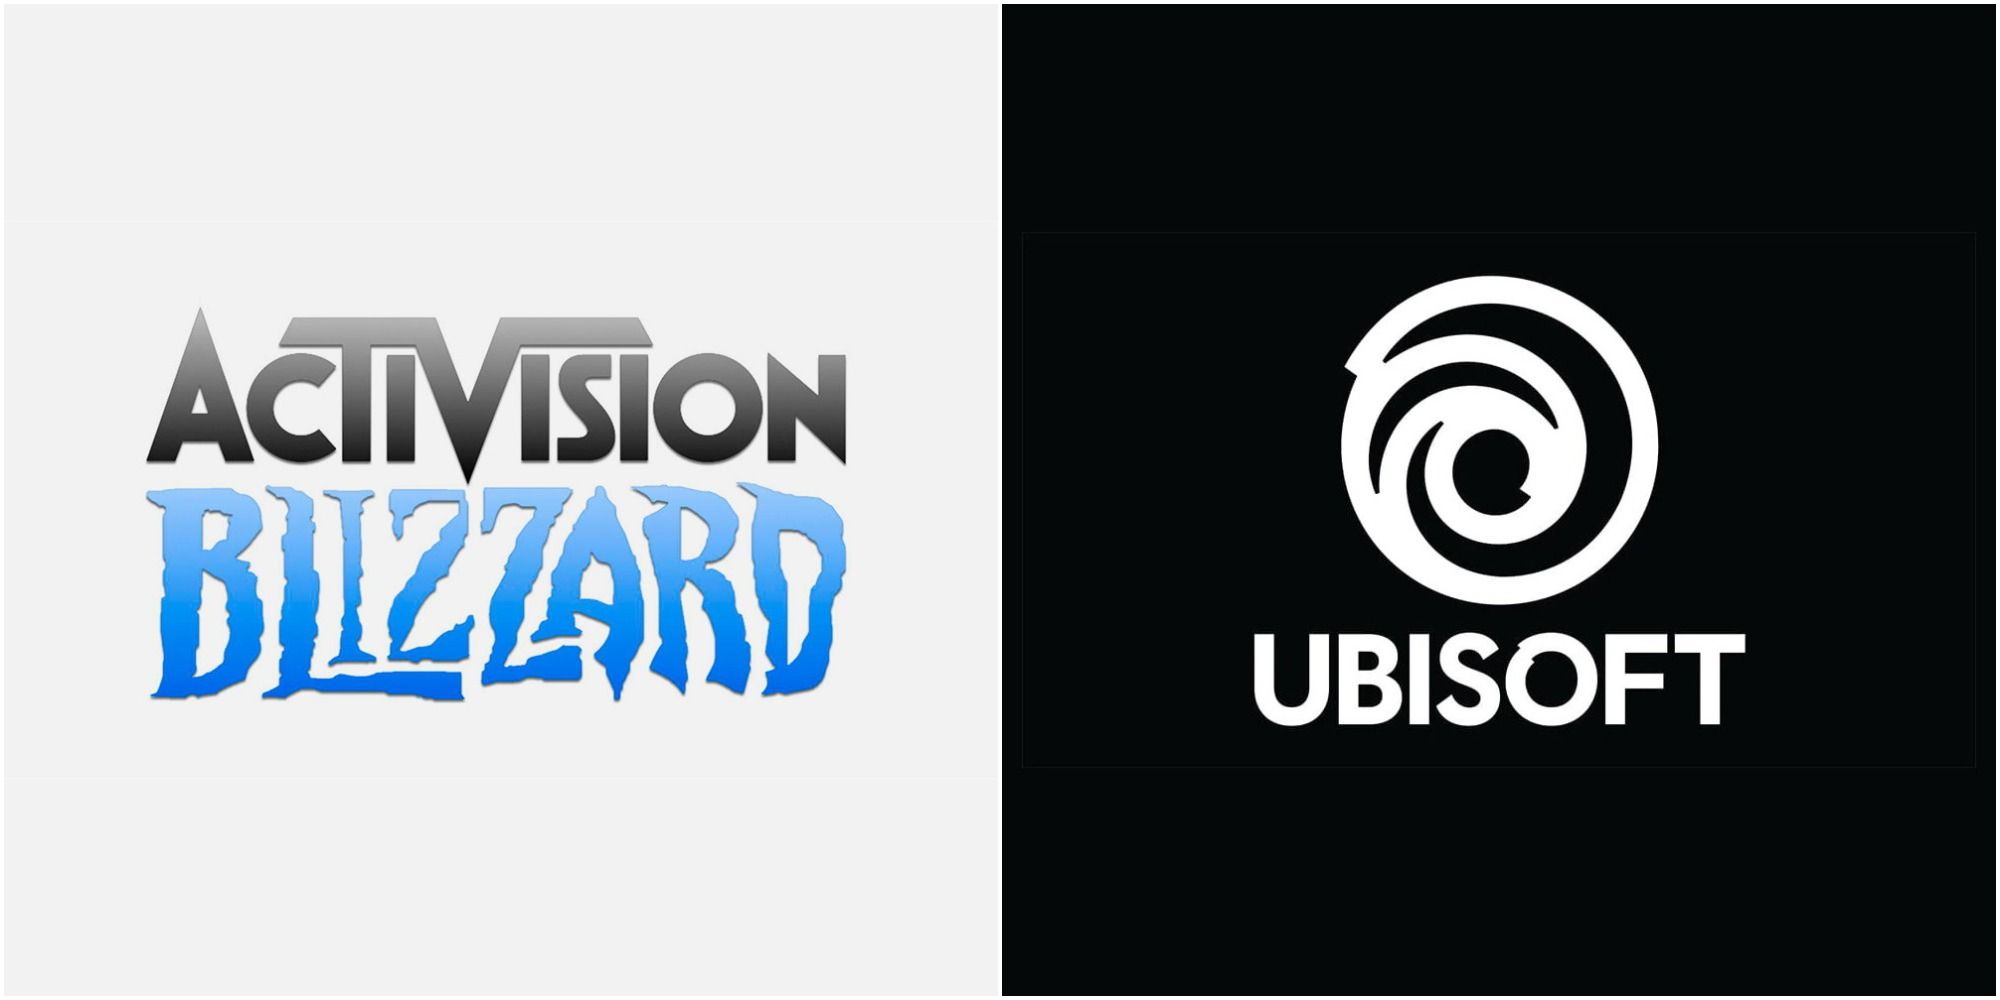 Activision Blizzard Ubisoft Cover